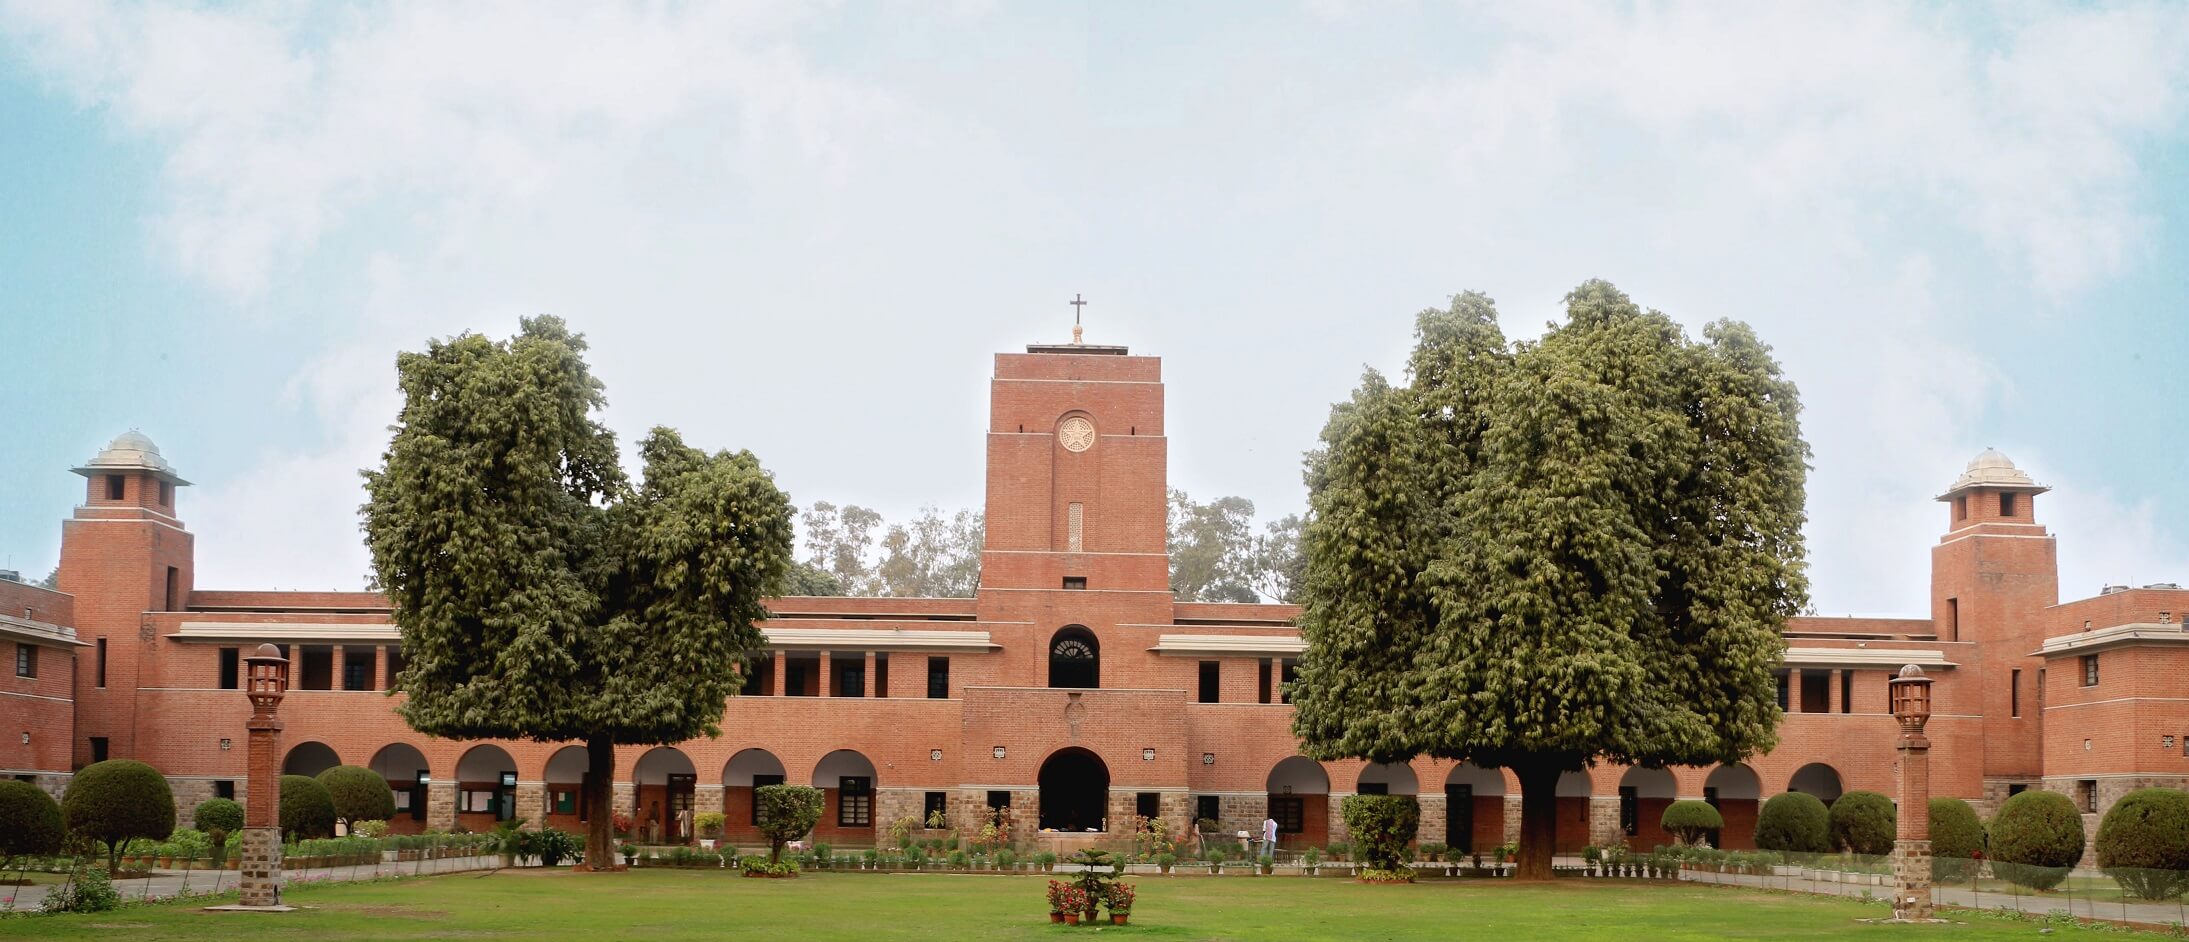 St. Stephen's College, Delhi Image